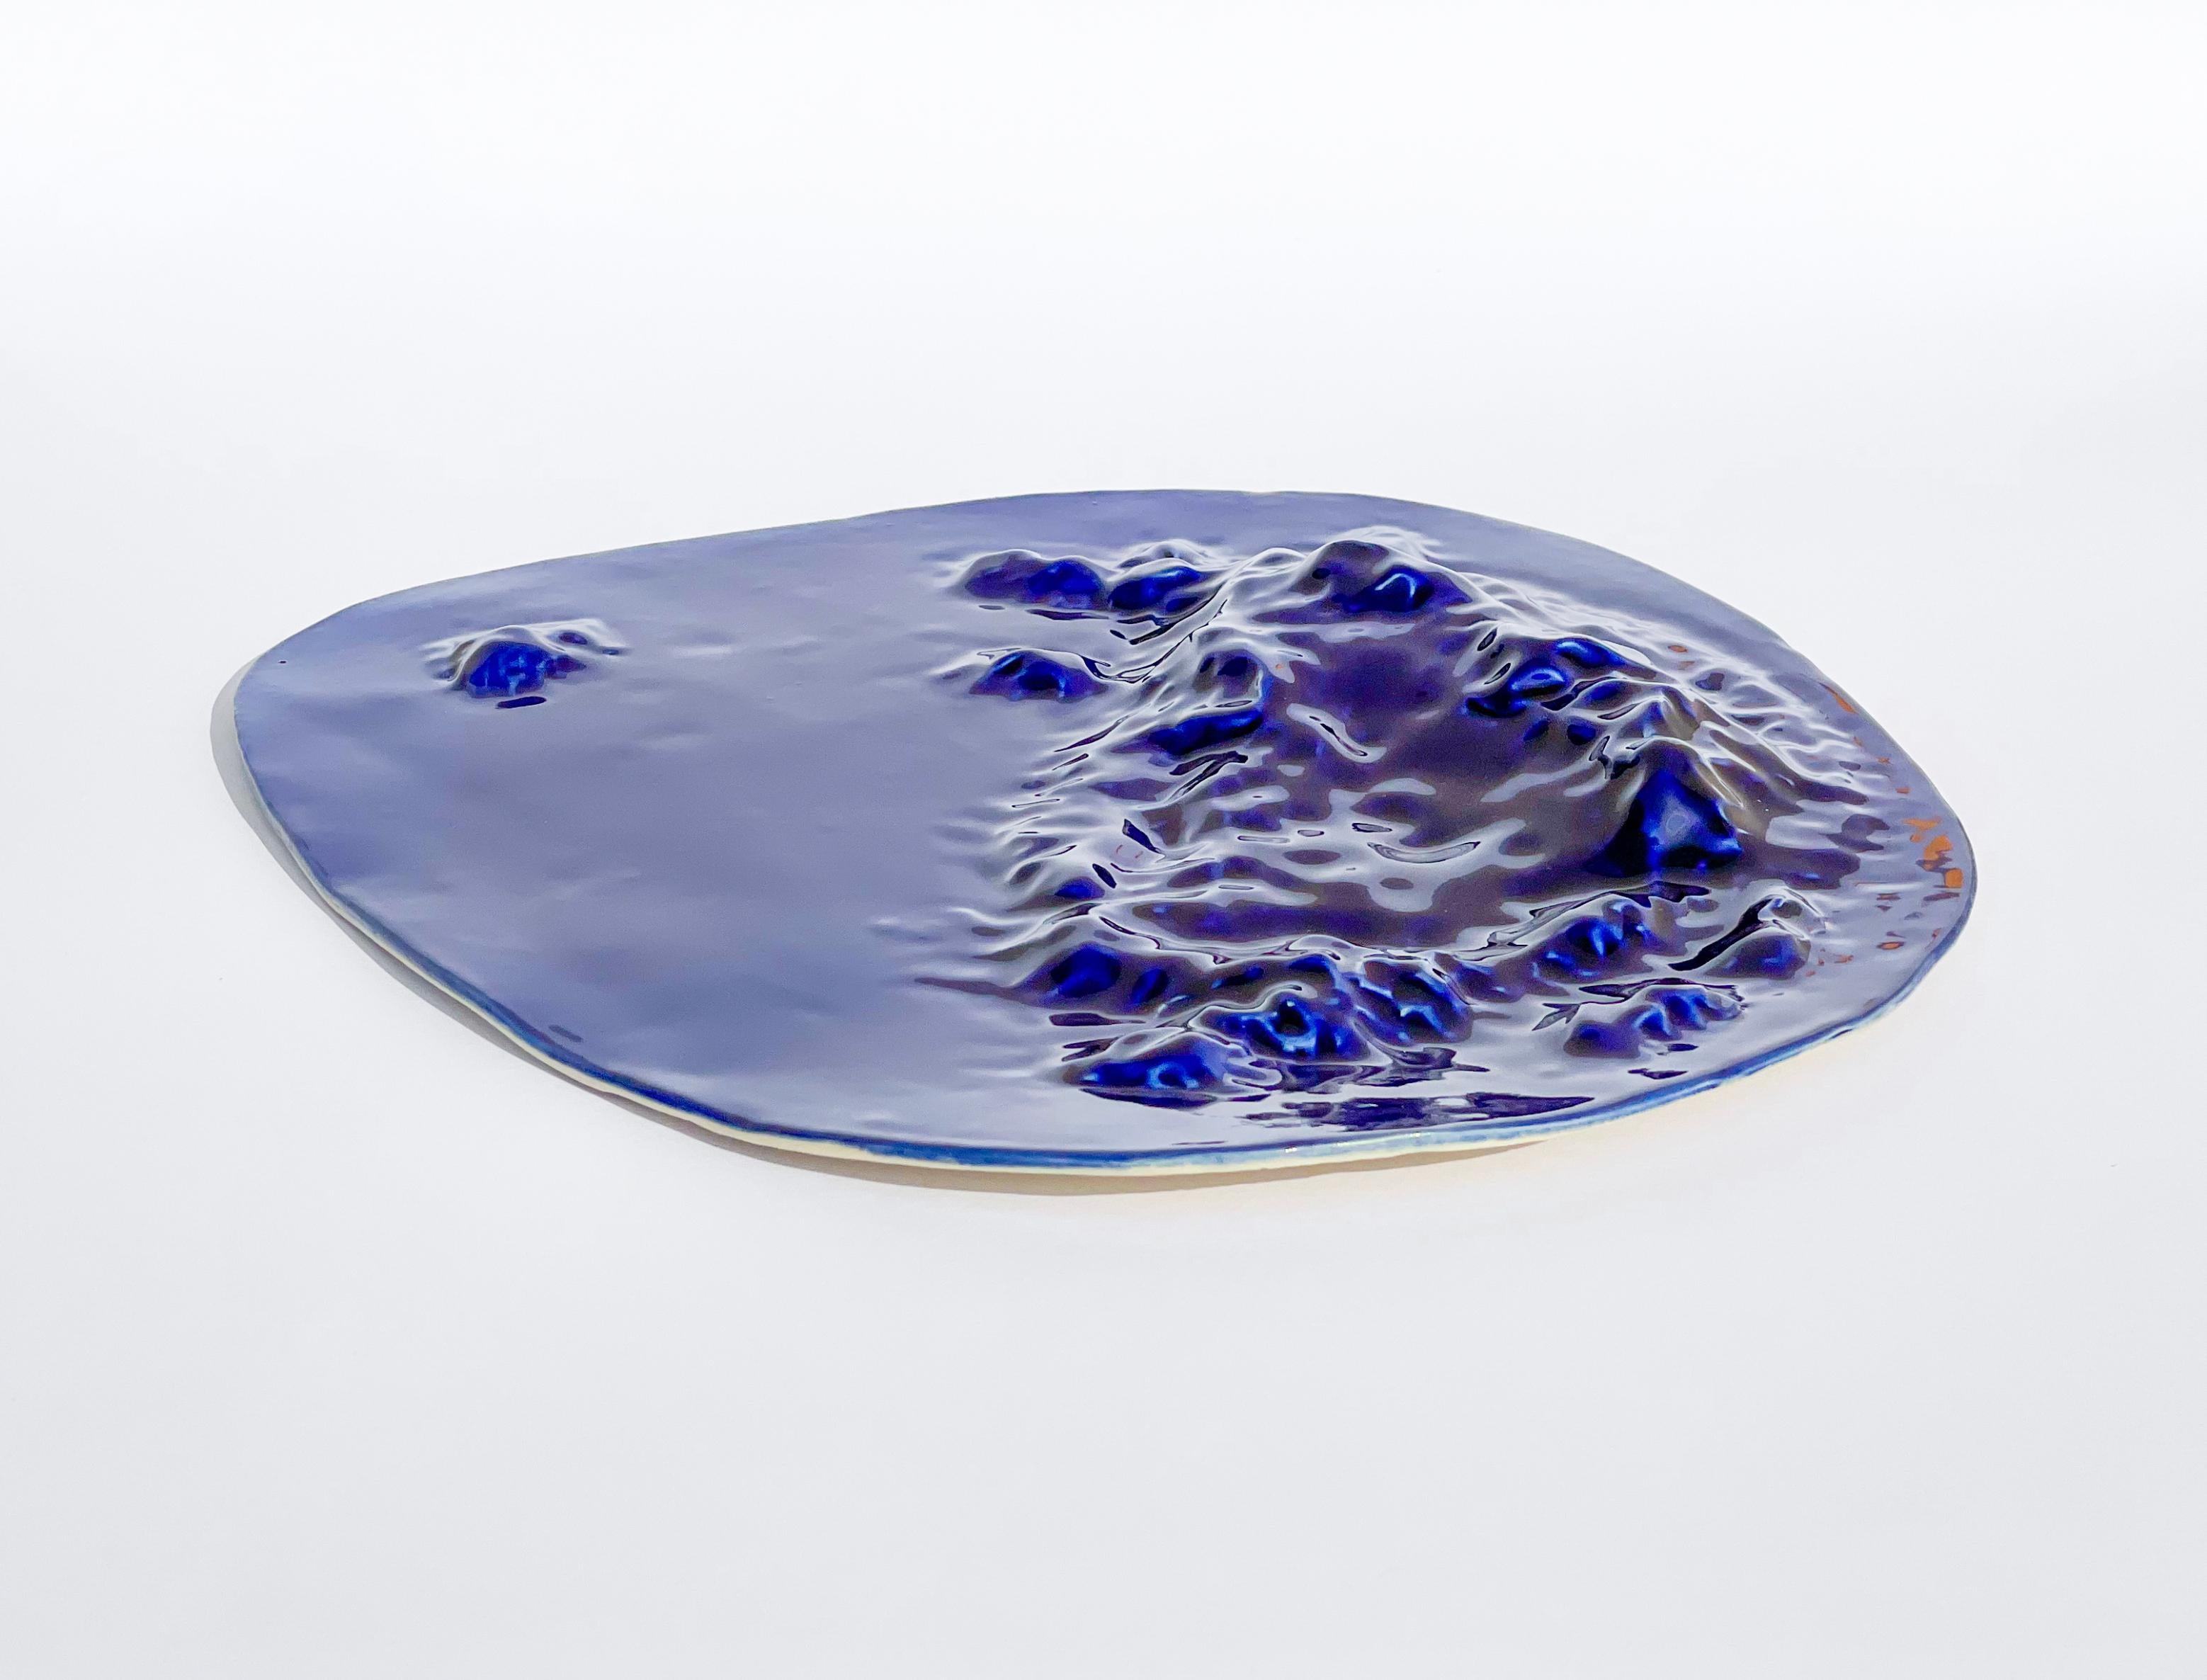 Unique Sculptural 'Gongshi' Plates N0.11 Objet d'Art Cobalt Blue In New Condition For Sale In London, GB